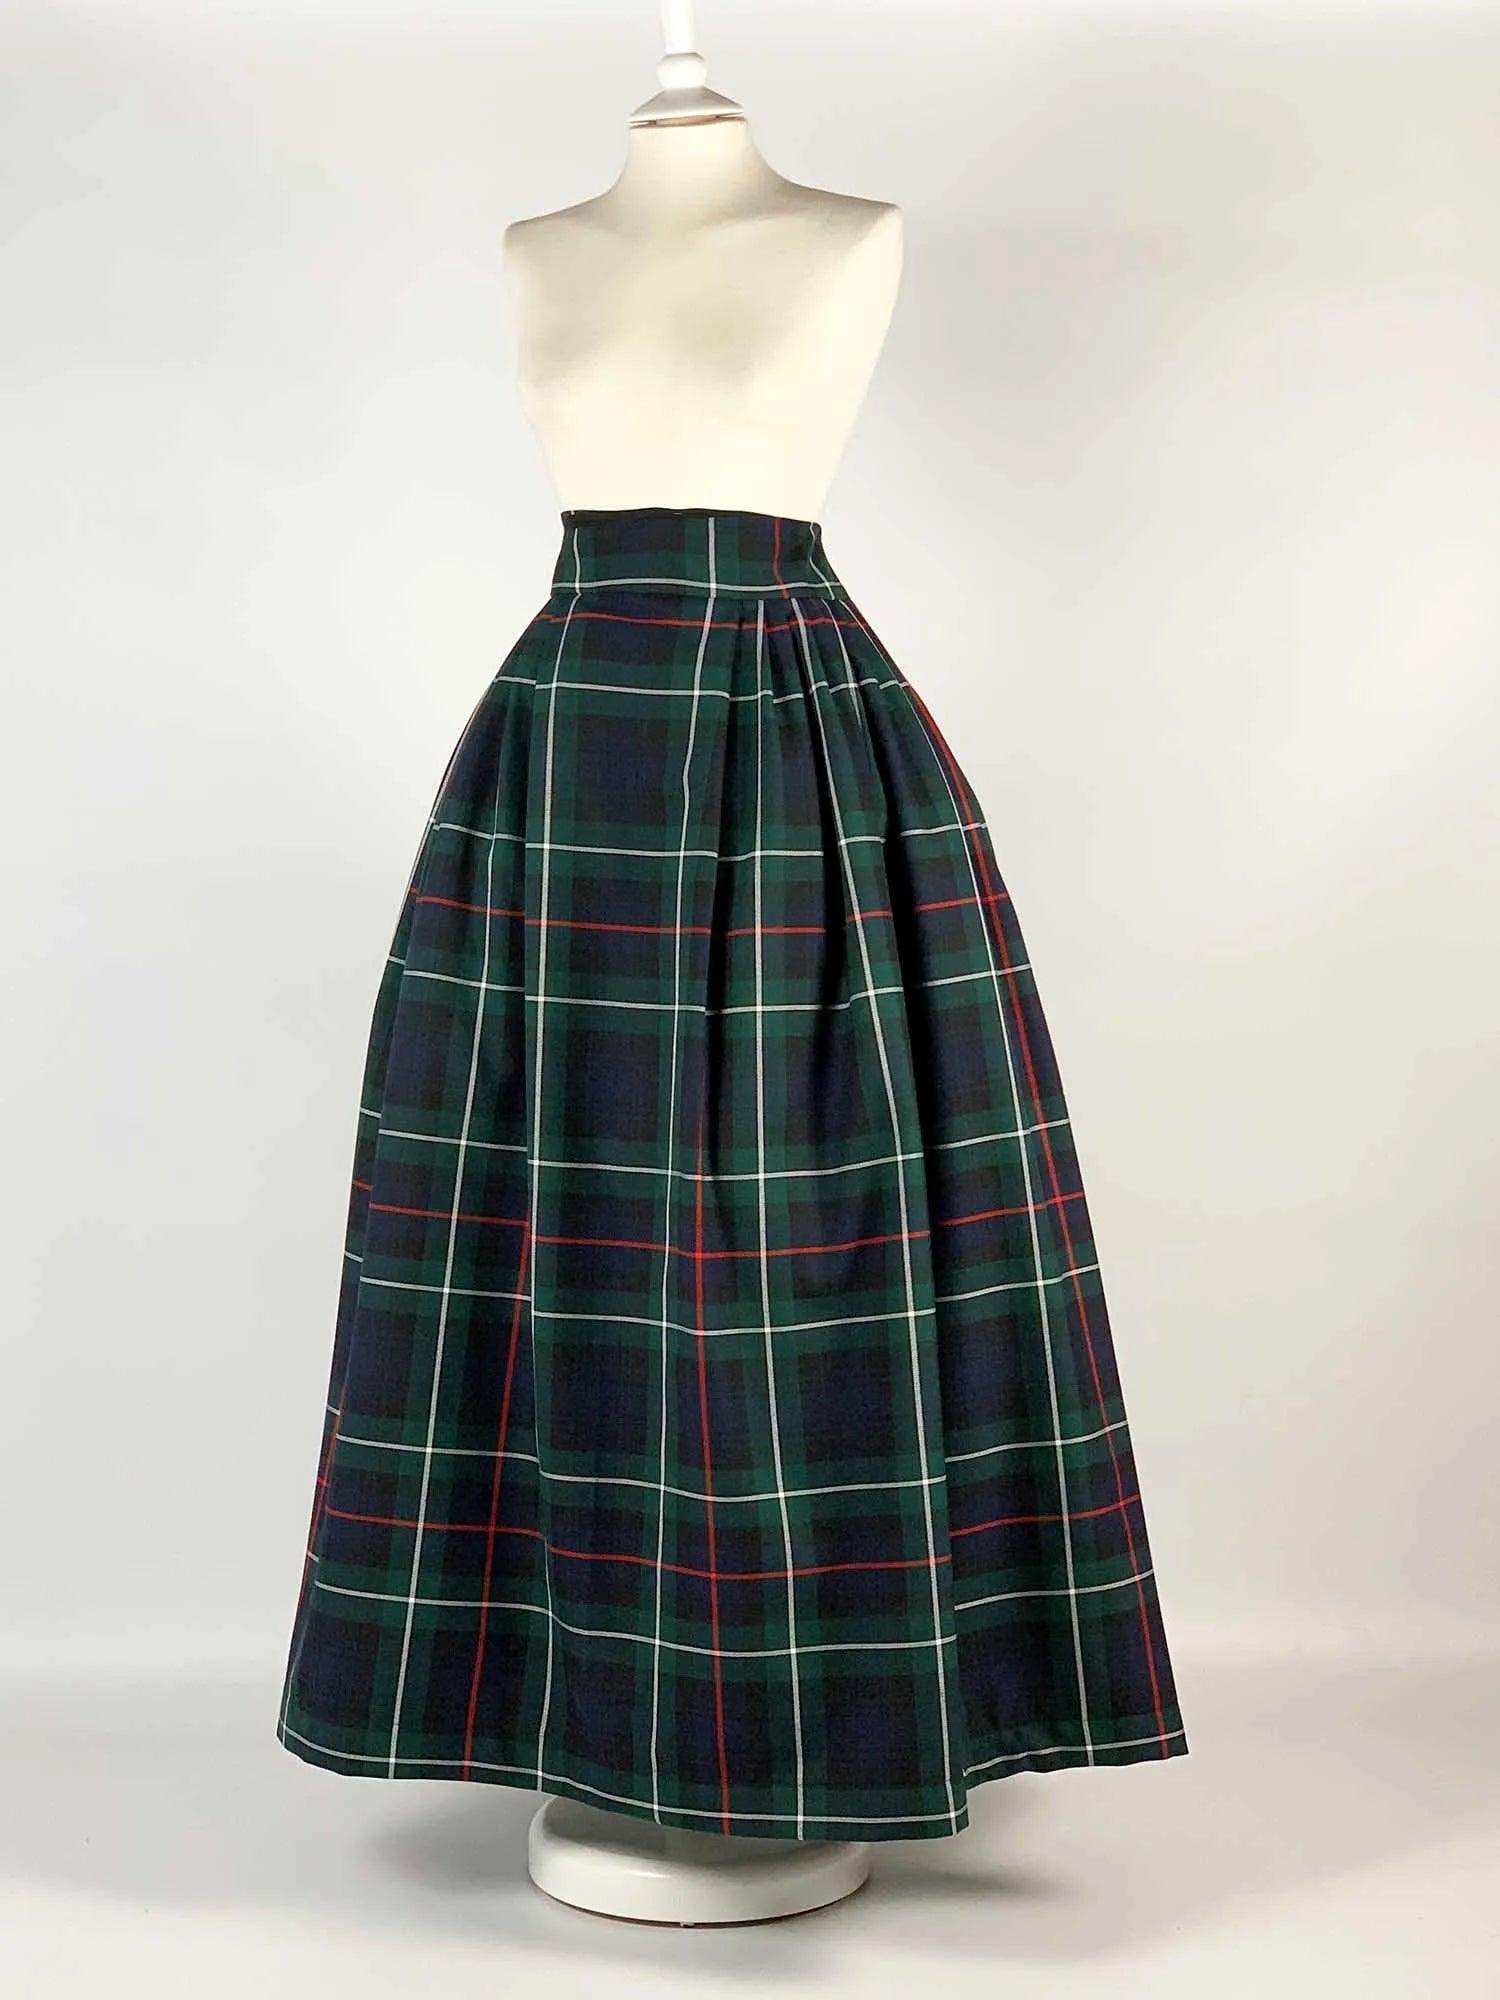 Plaid Skirt in MacKenzie Tartan - Atelier Serraspina